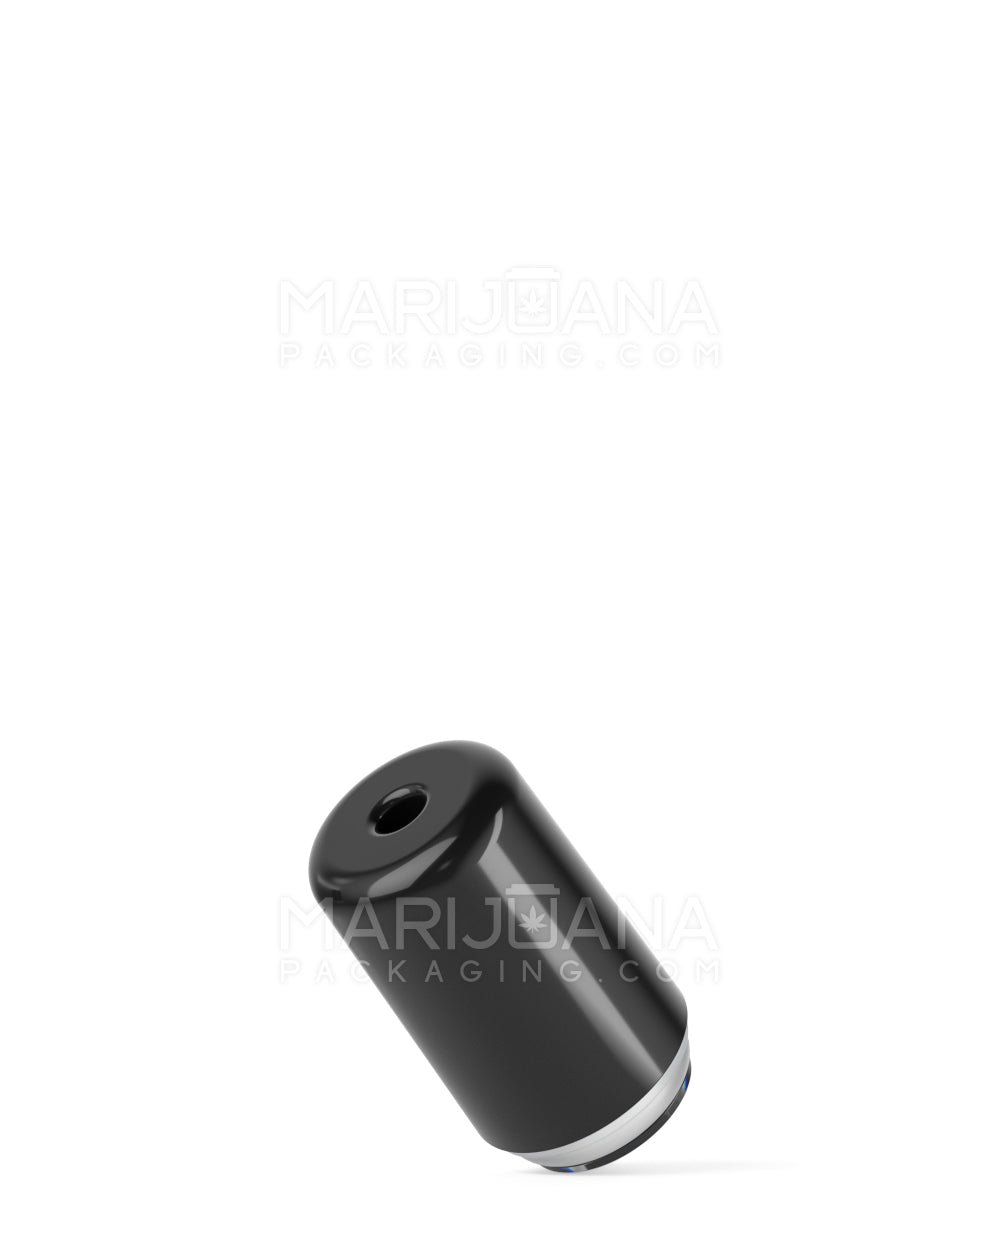 RAE | Round Vape Mouthpiece for Hand Press Ceramic Cartridges | Black Ceramic - Hand Press - 400 Count - 4